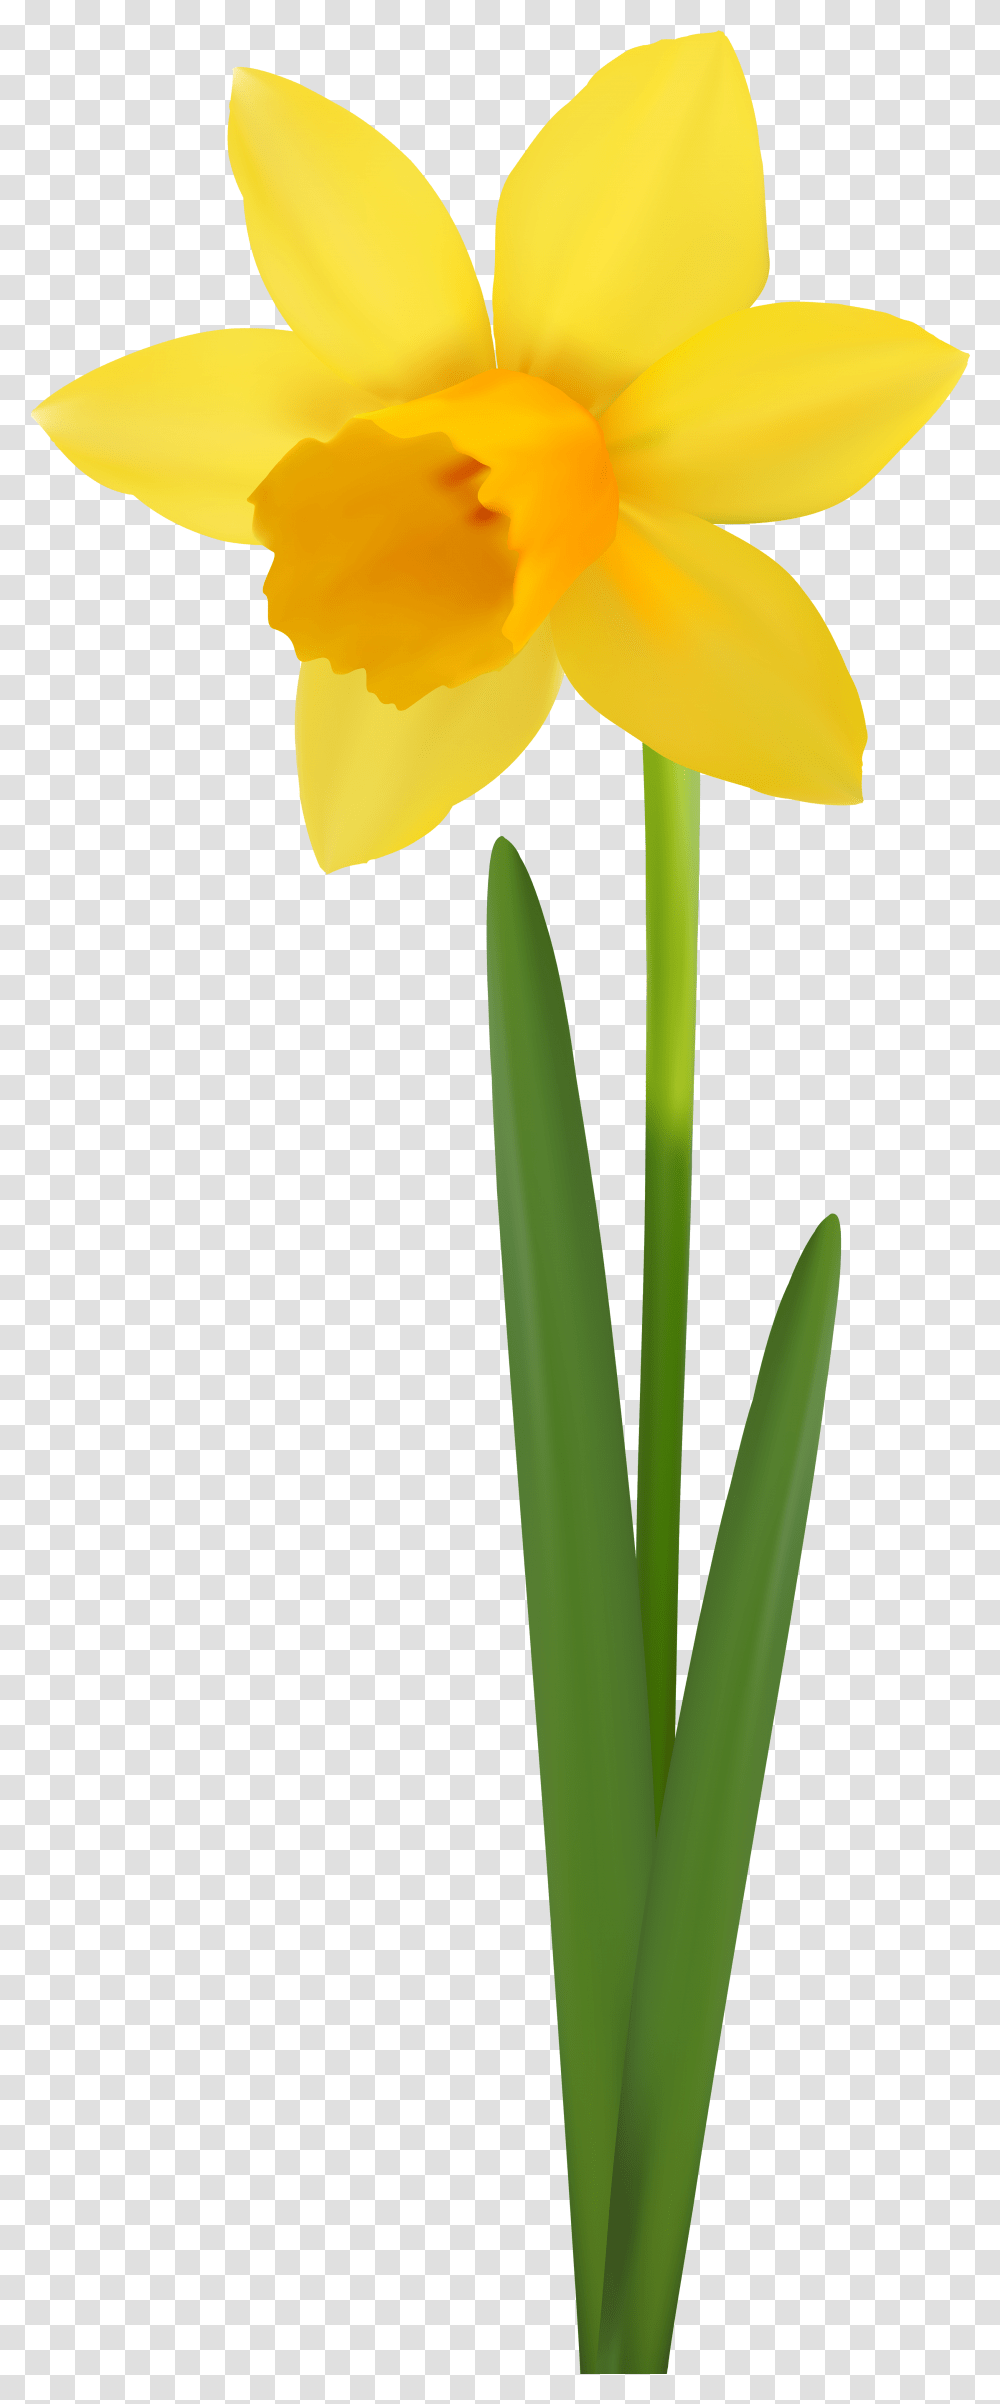 Download Free Daffodil Flower Image Daffodil Flower, Plant, Blossom, Tulip, Iris Transparent Png